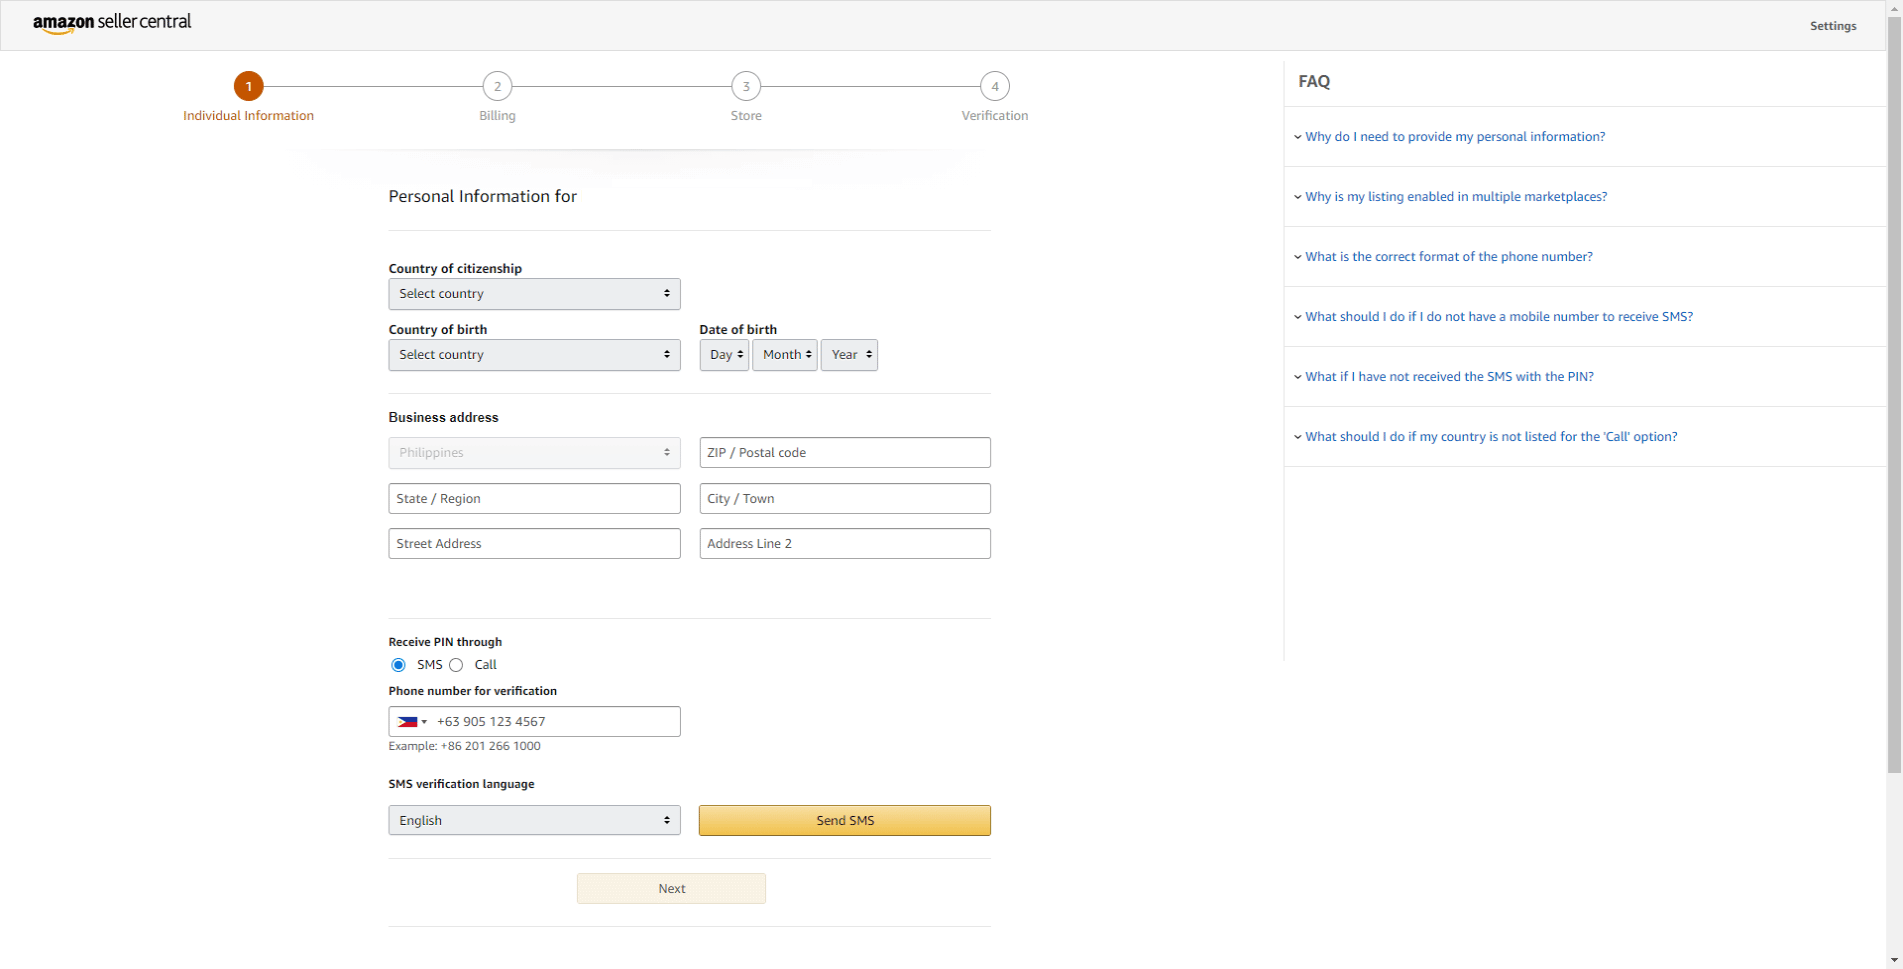 Amazon Seller Registration Form